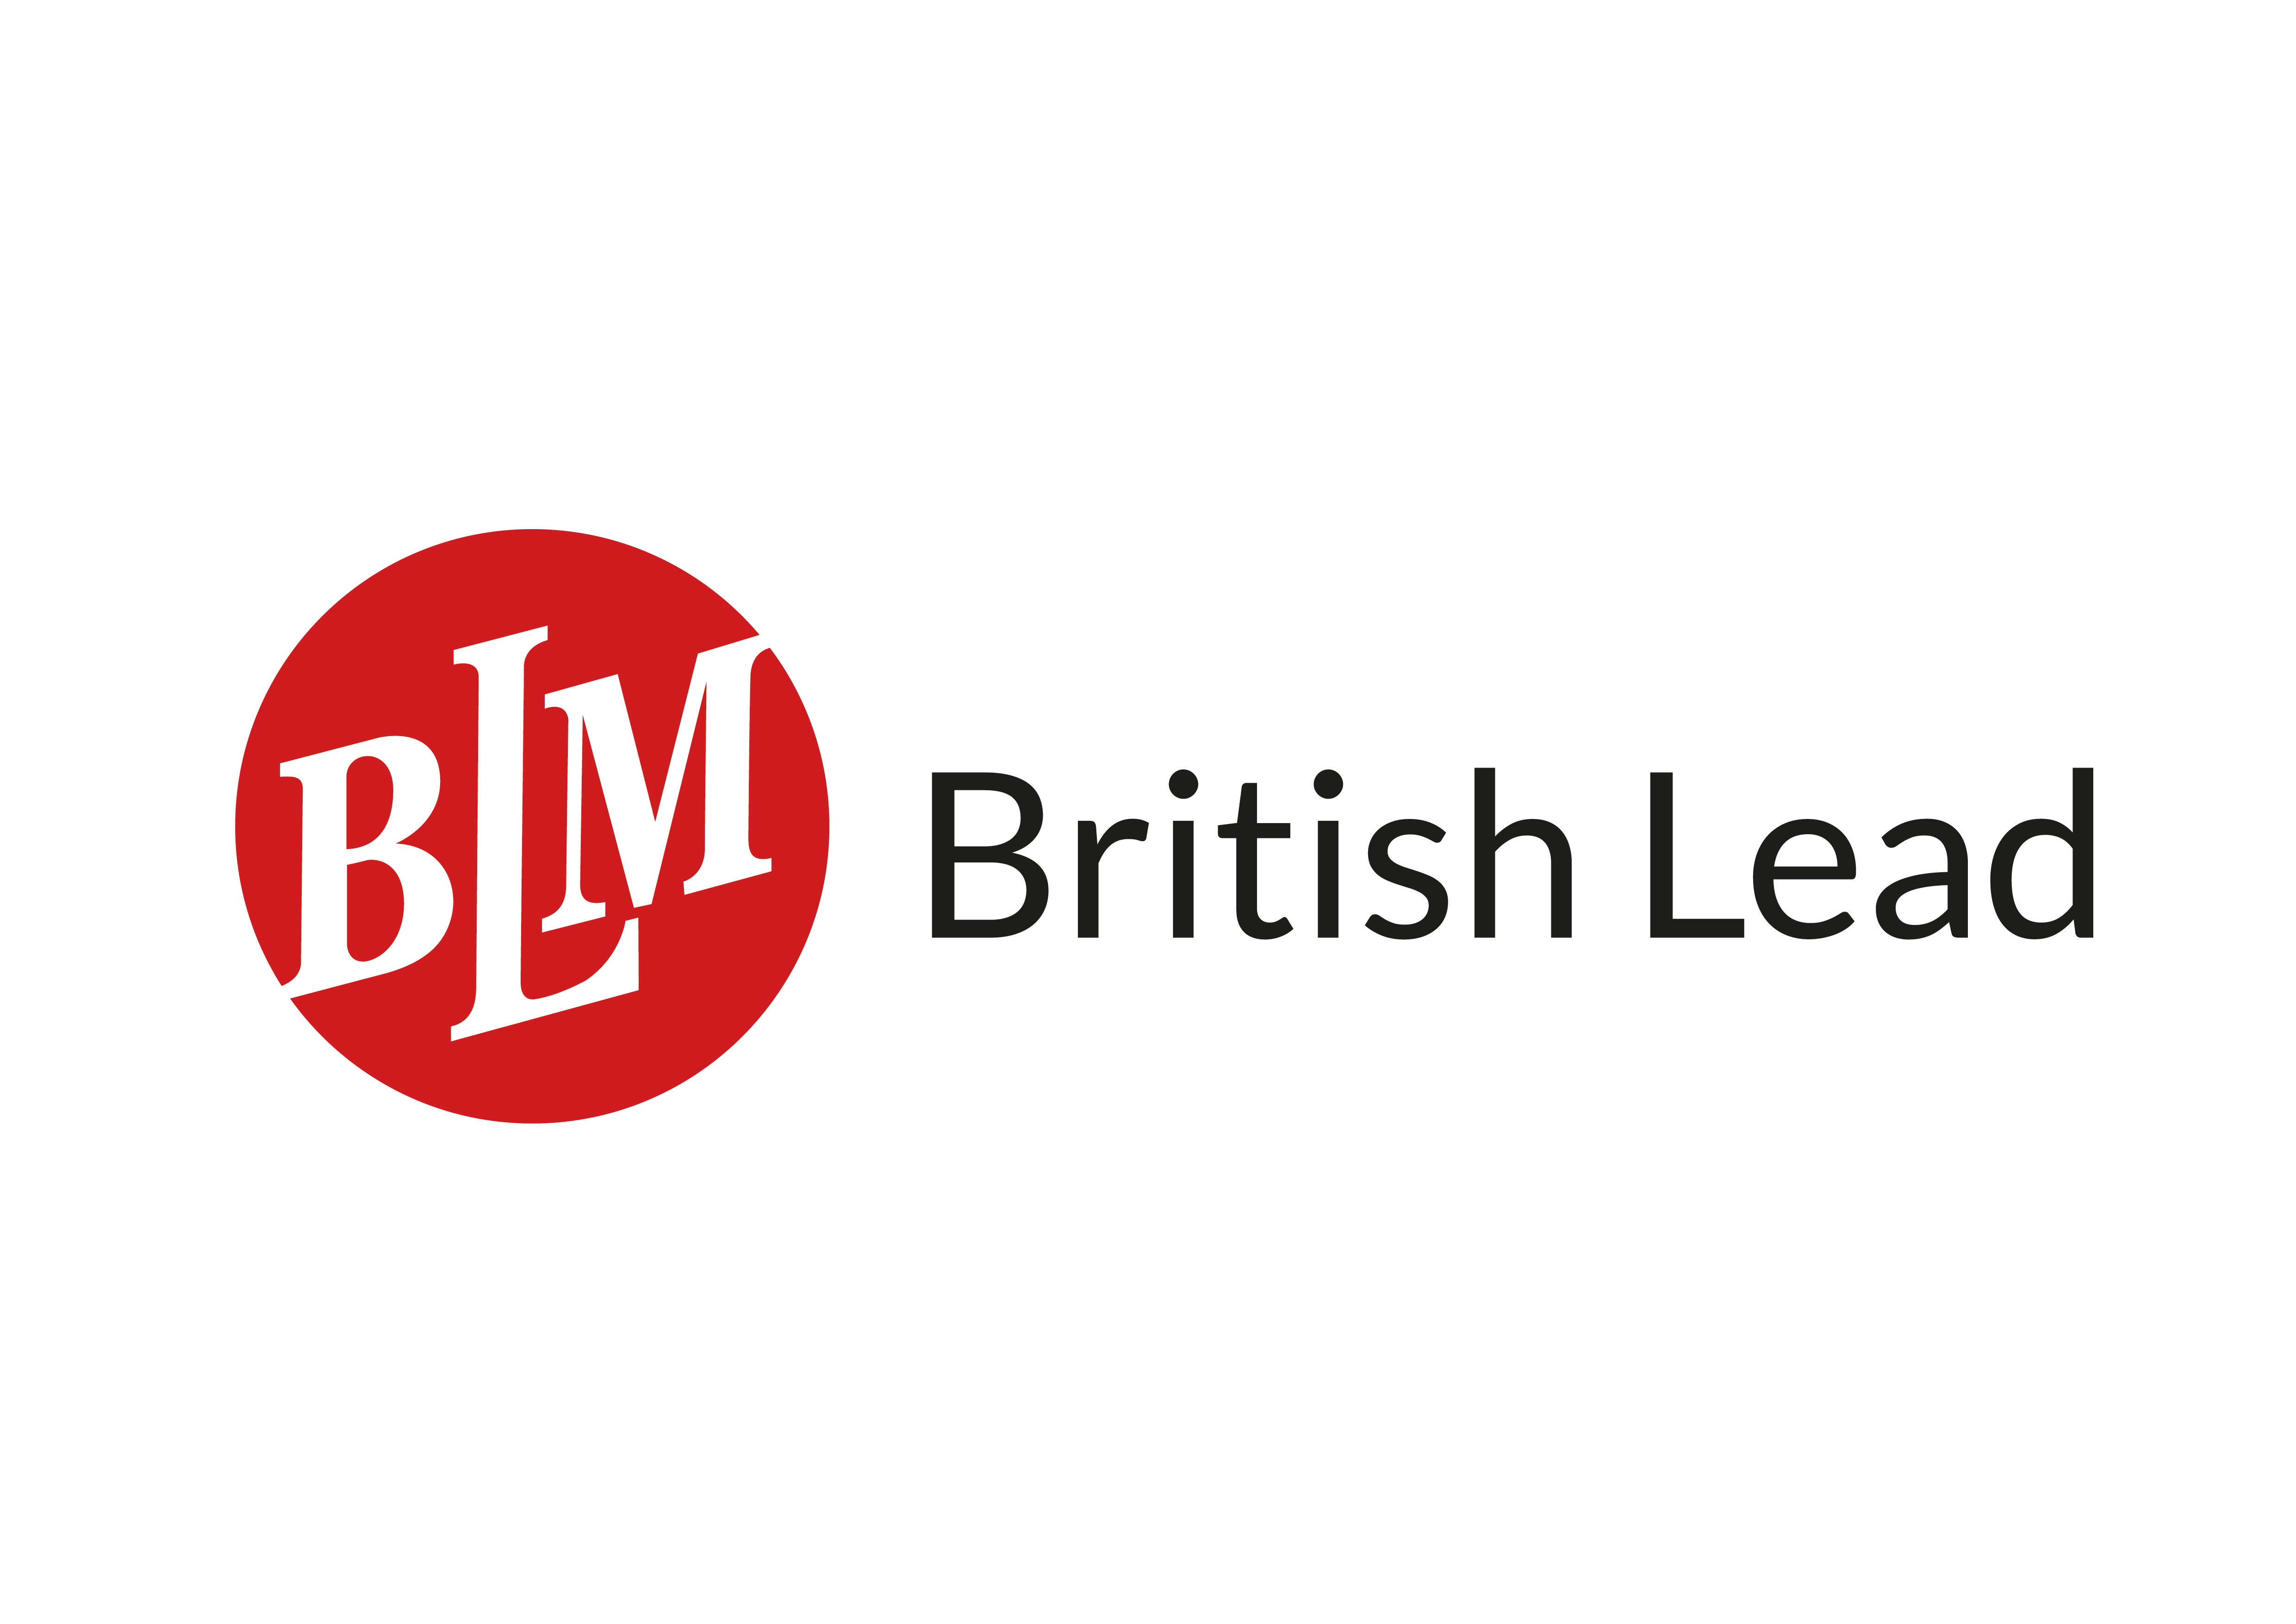 British Lead